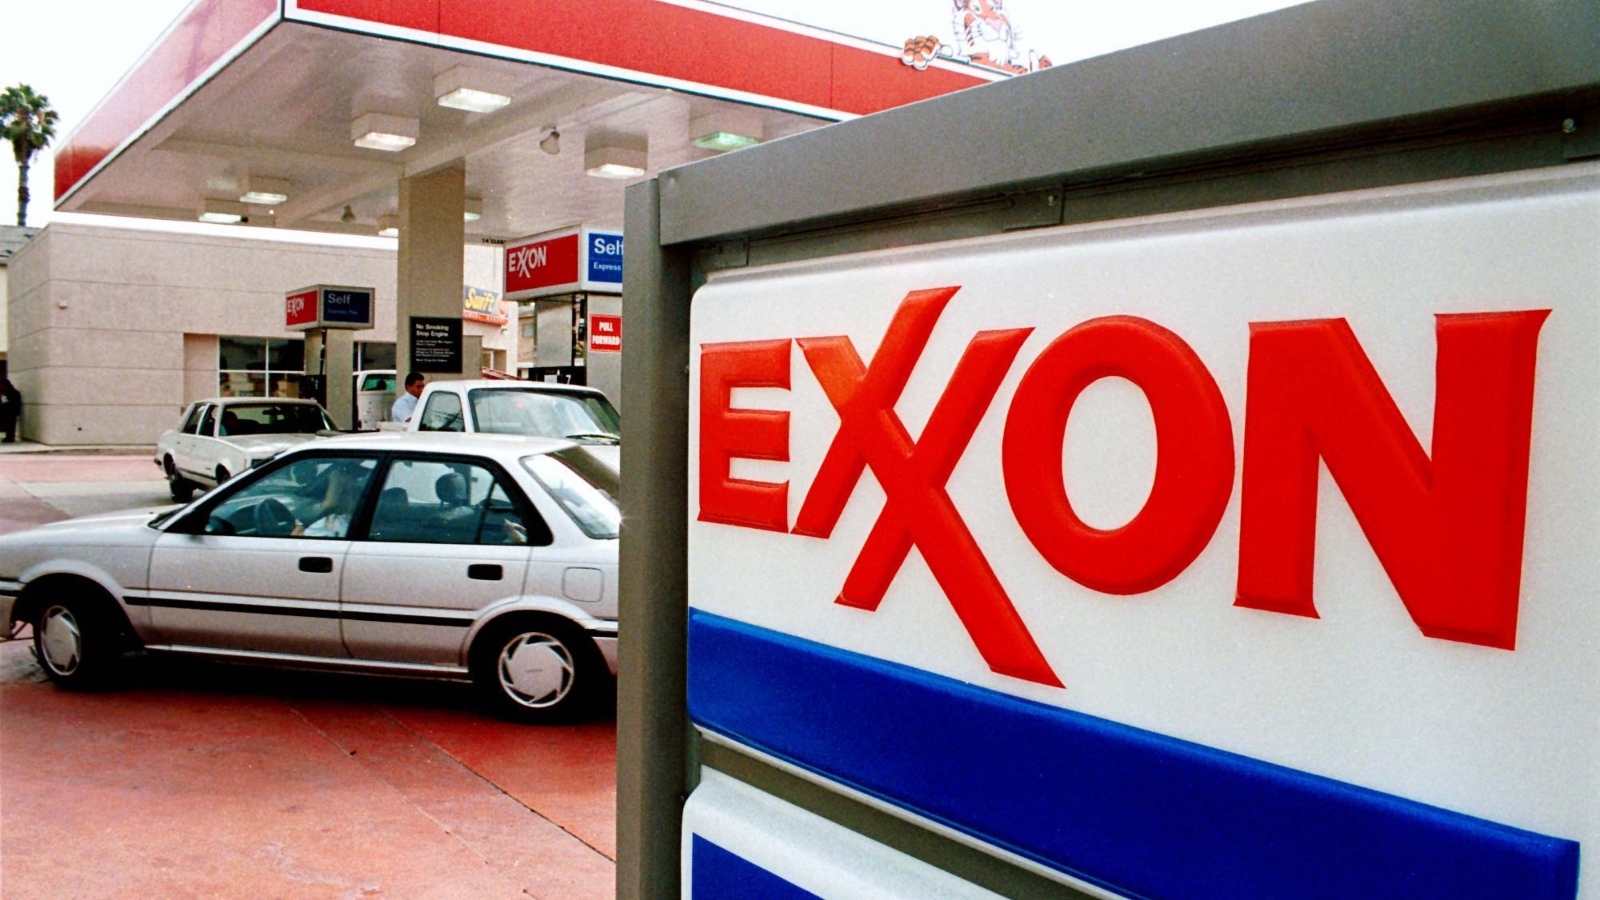 1990s-era photo of car at an Exxon gas station.